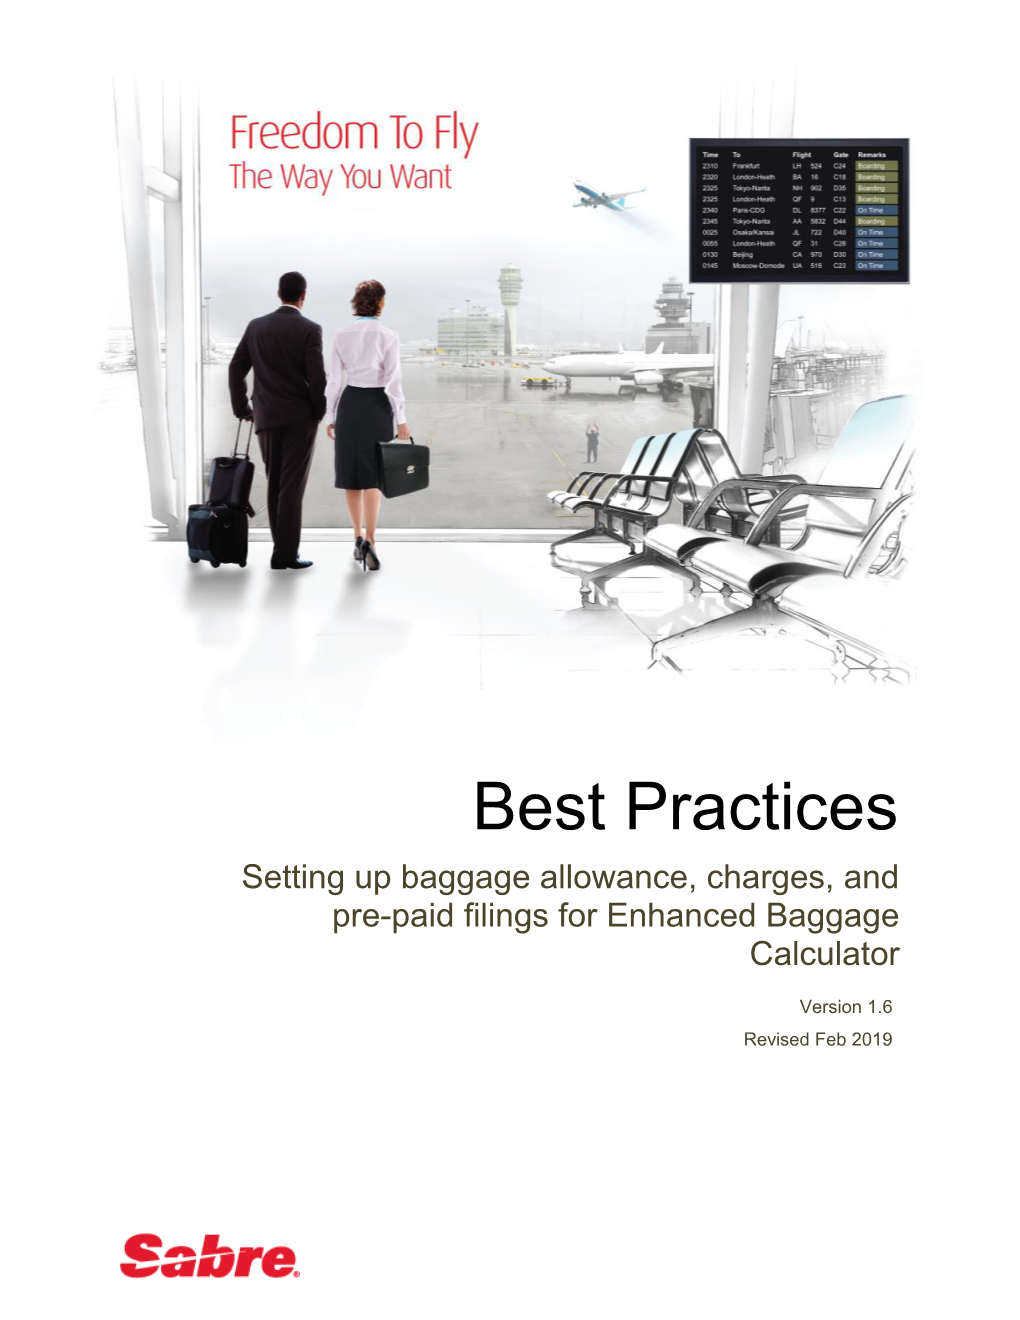 Best Practices Baggage Calculator